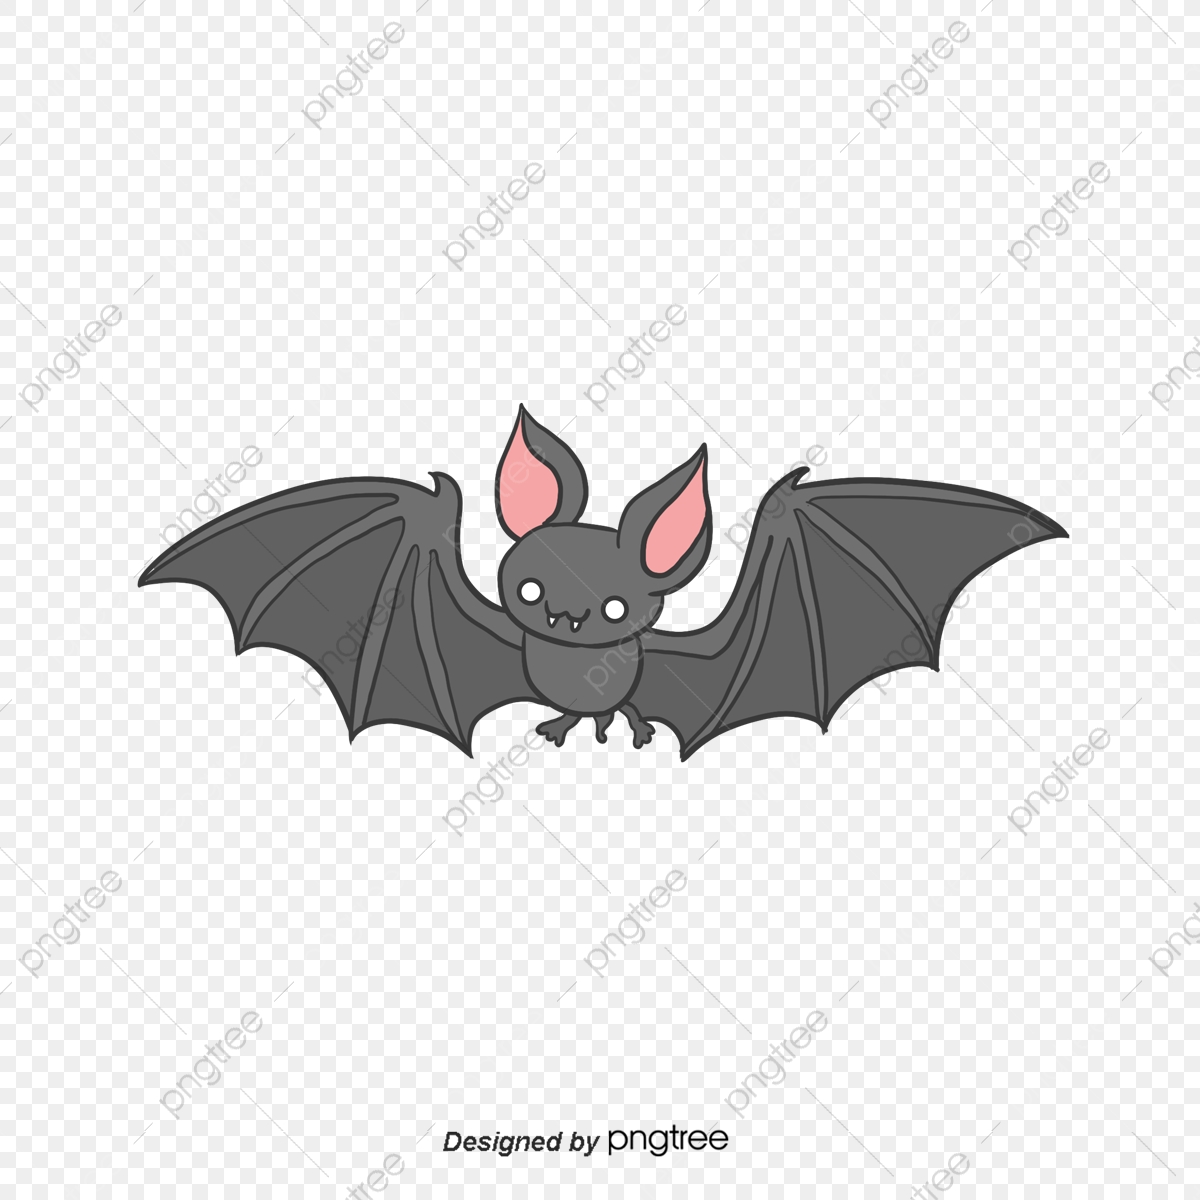 Flying bats animal cartoon. Clipart bat grey